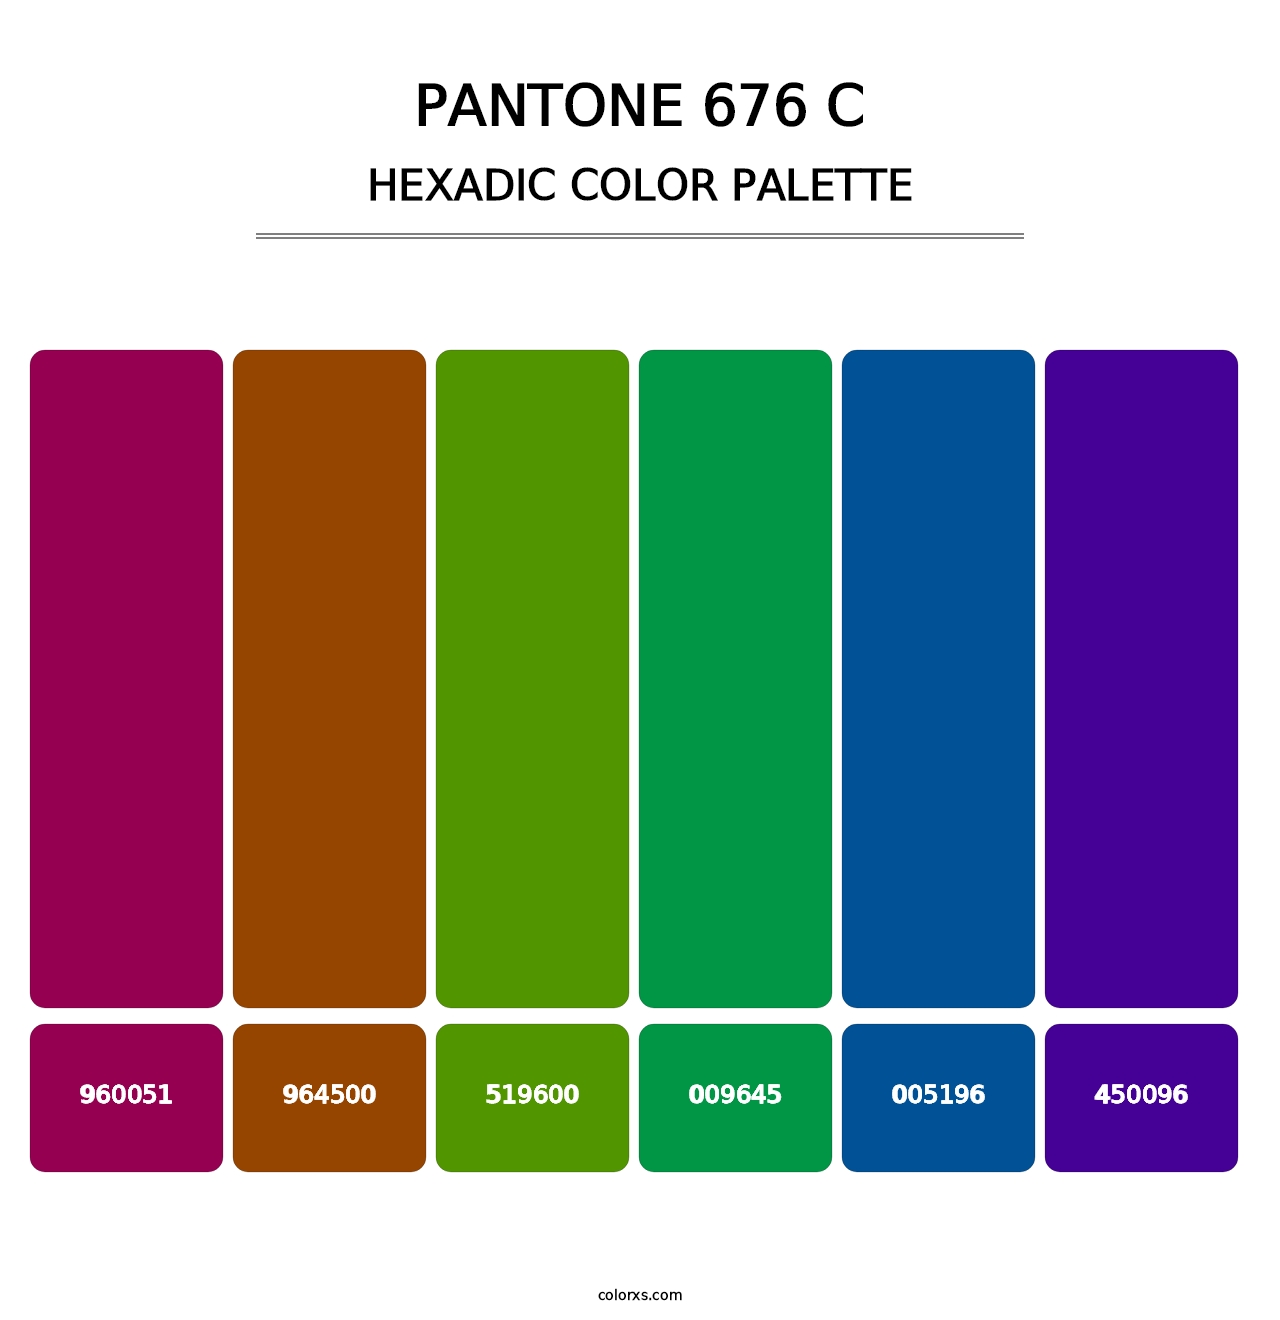 PANTONE 676 C - Hexadic Color Palette